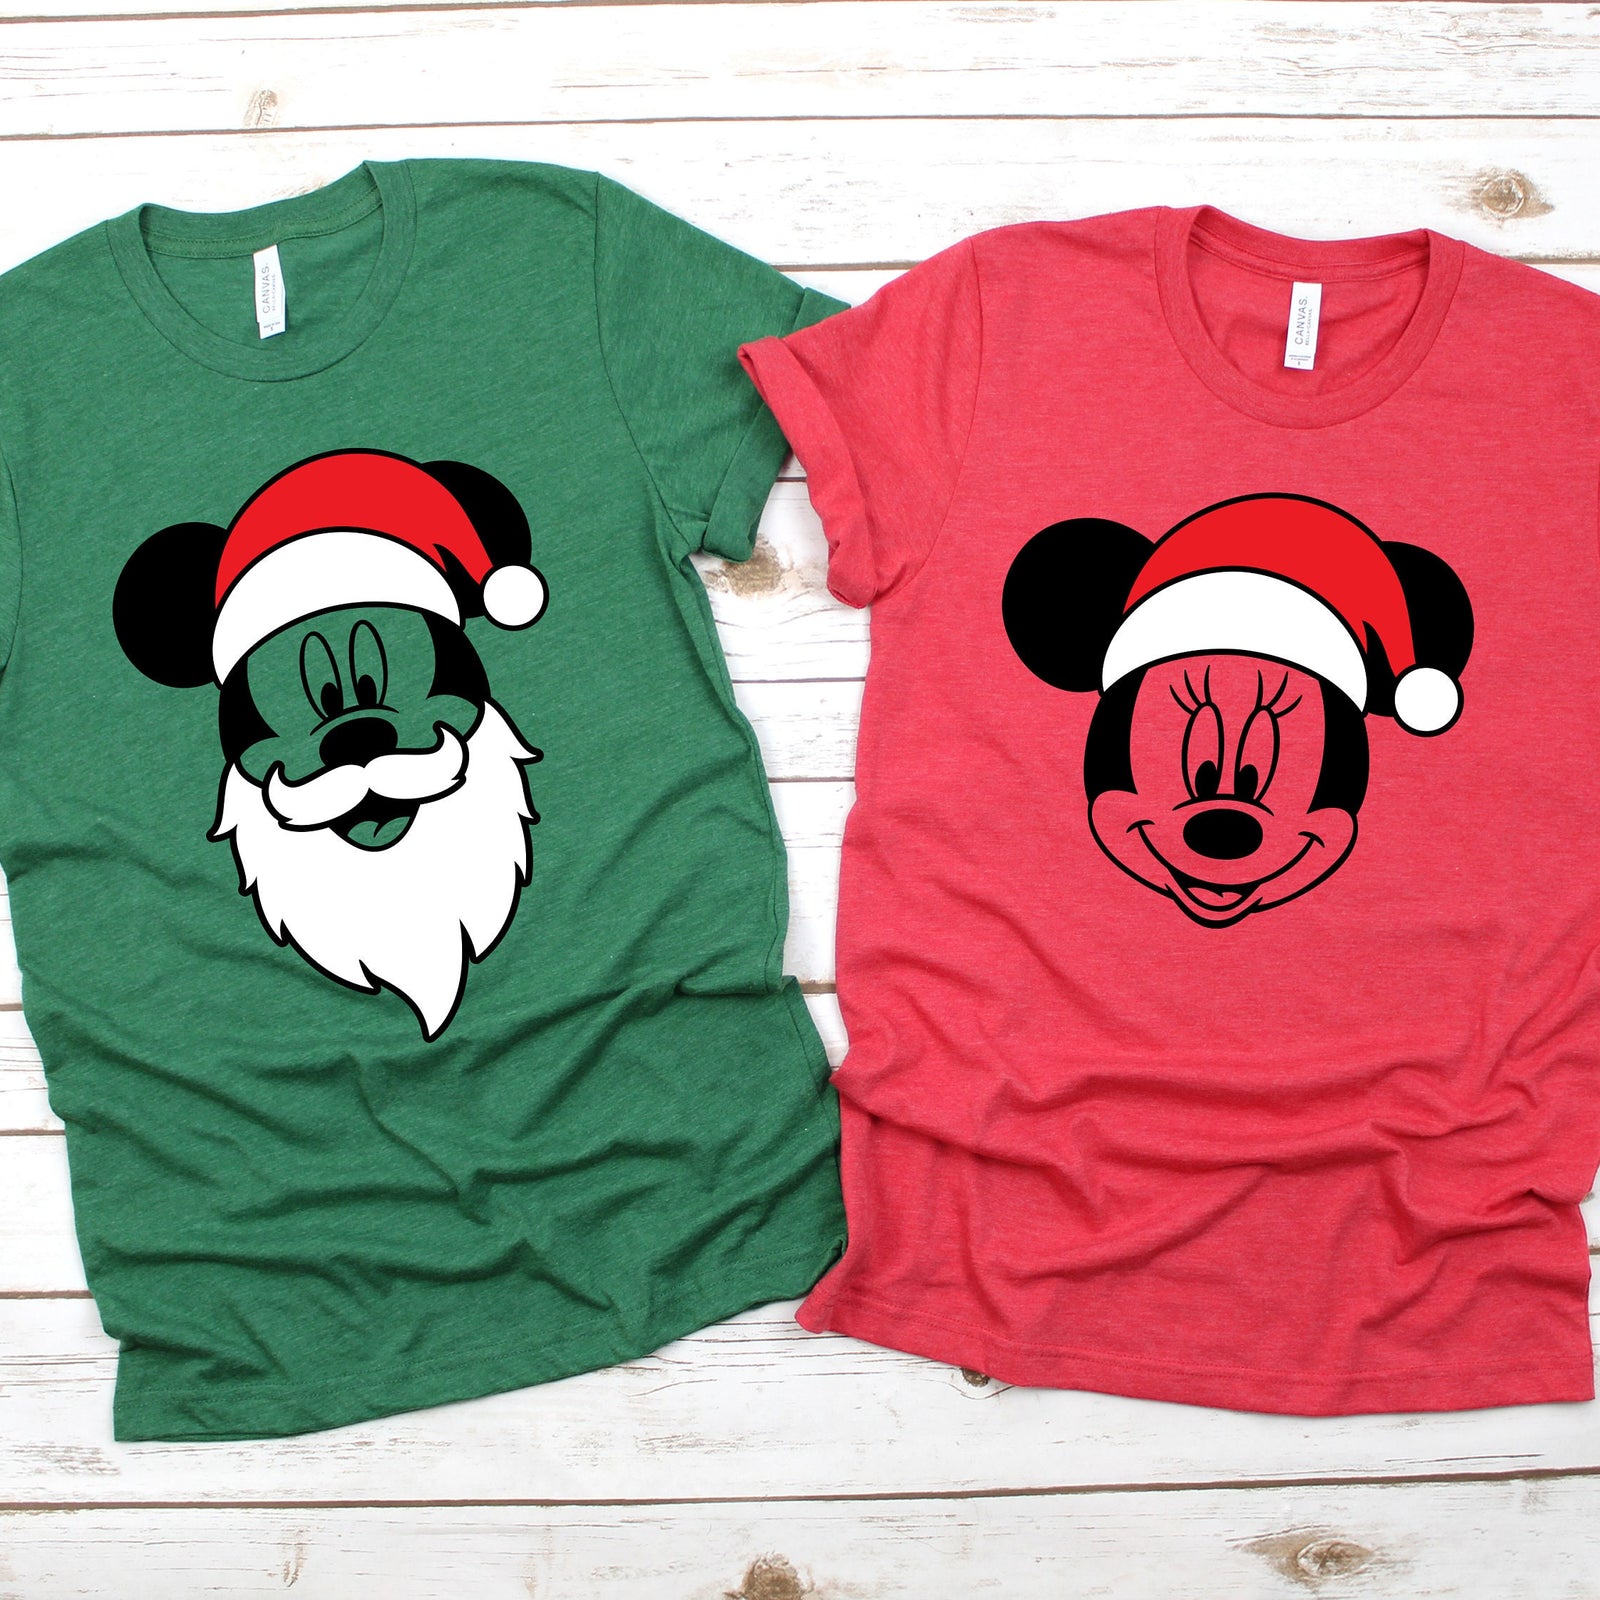 Santa Mickey and Santa Minnie Christmas T Shirts - Christmas Disney Couples Shirt - Disney Matching Shirts - Mickey & Minnie Christmas Shirt